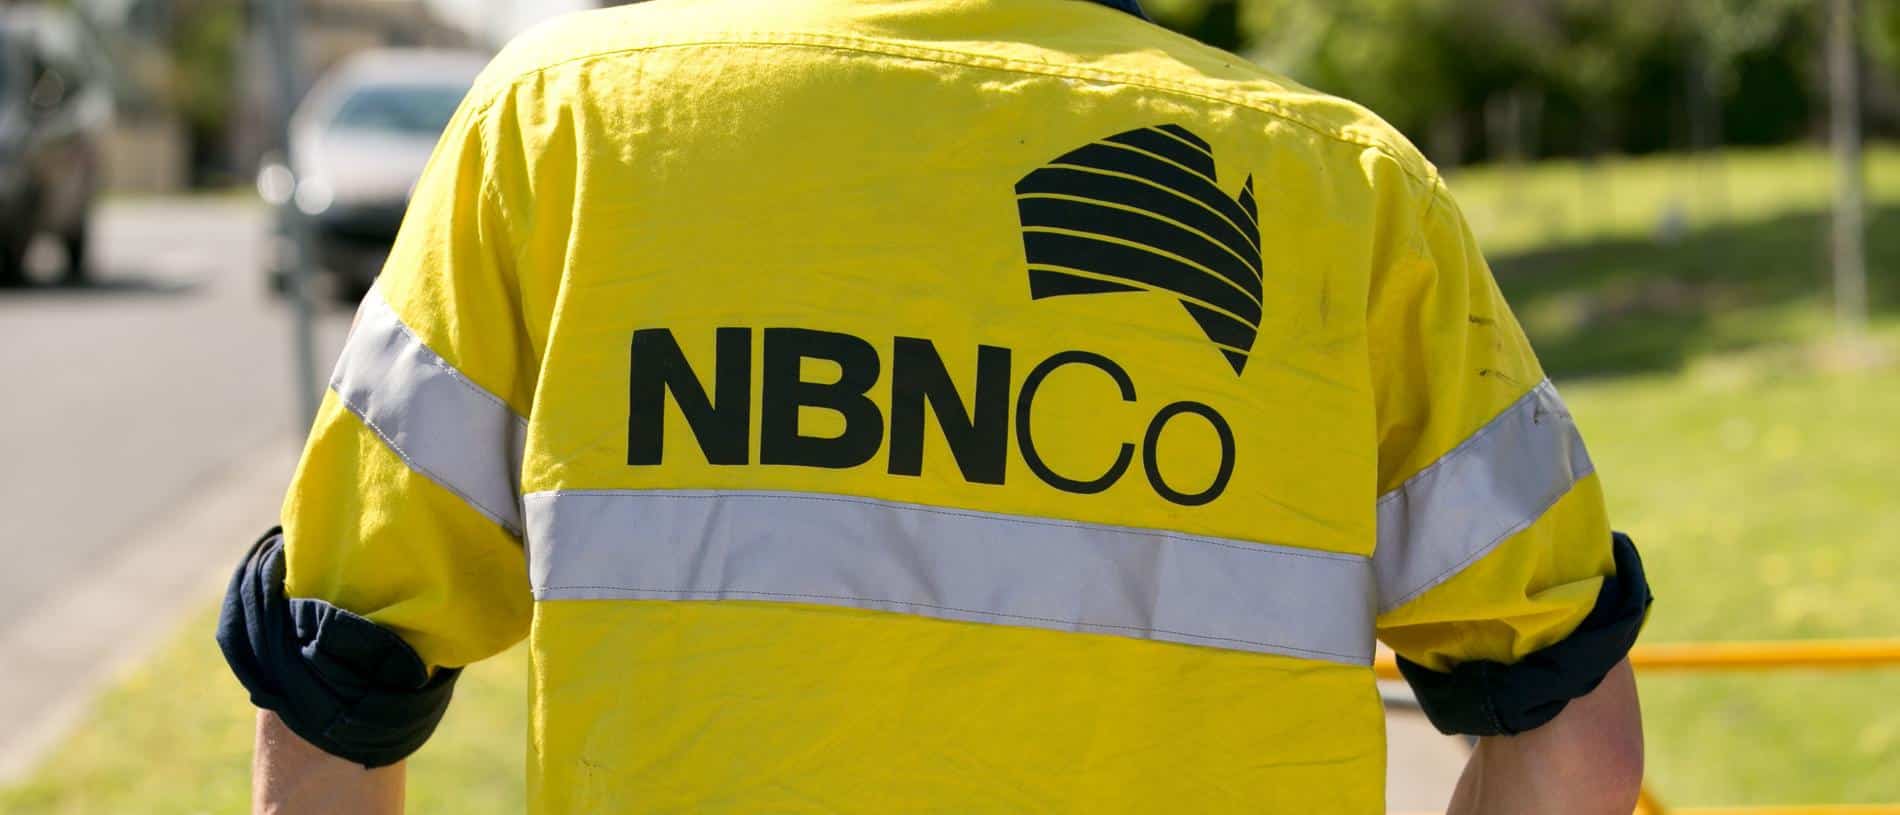 NBNCo uniform